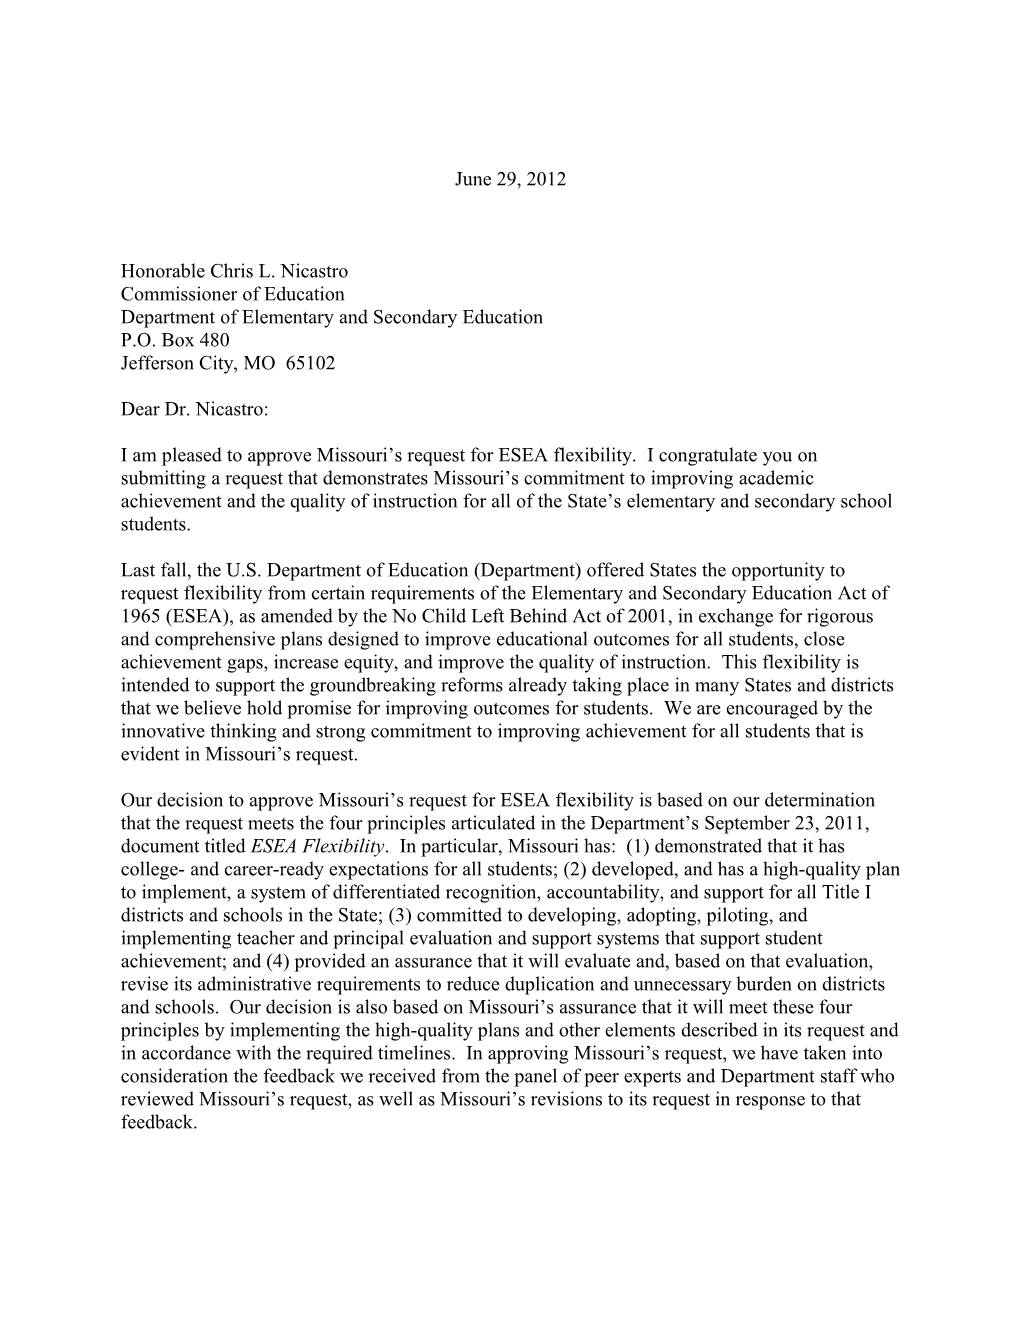 Missouri: ESEA Flexibility Requests, Secretary's Approval Letter June 29, 2012 (MS Word)